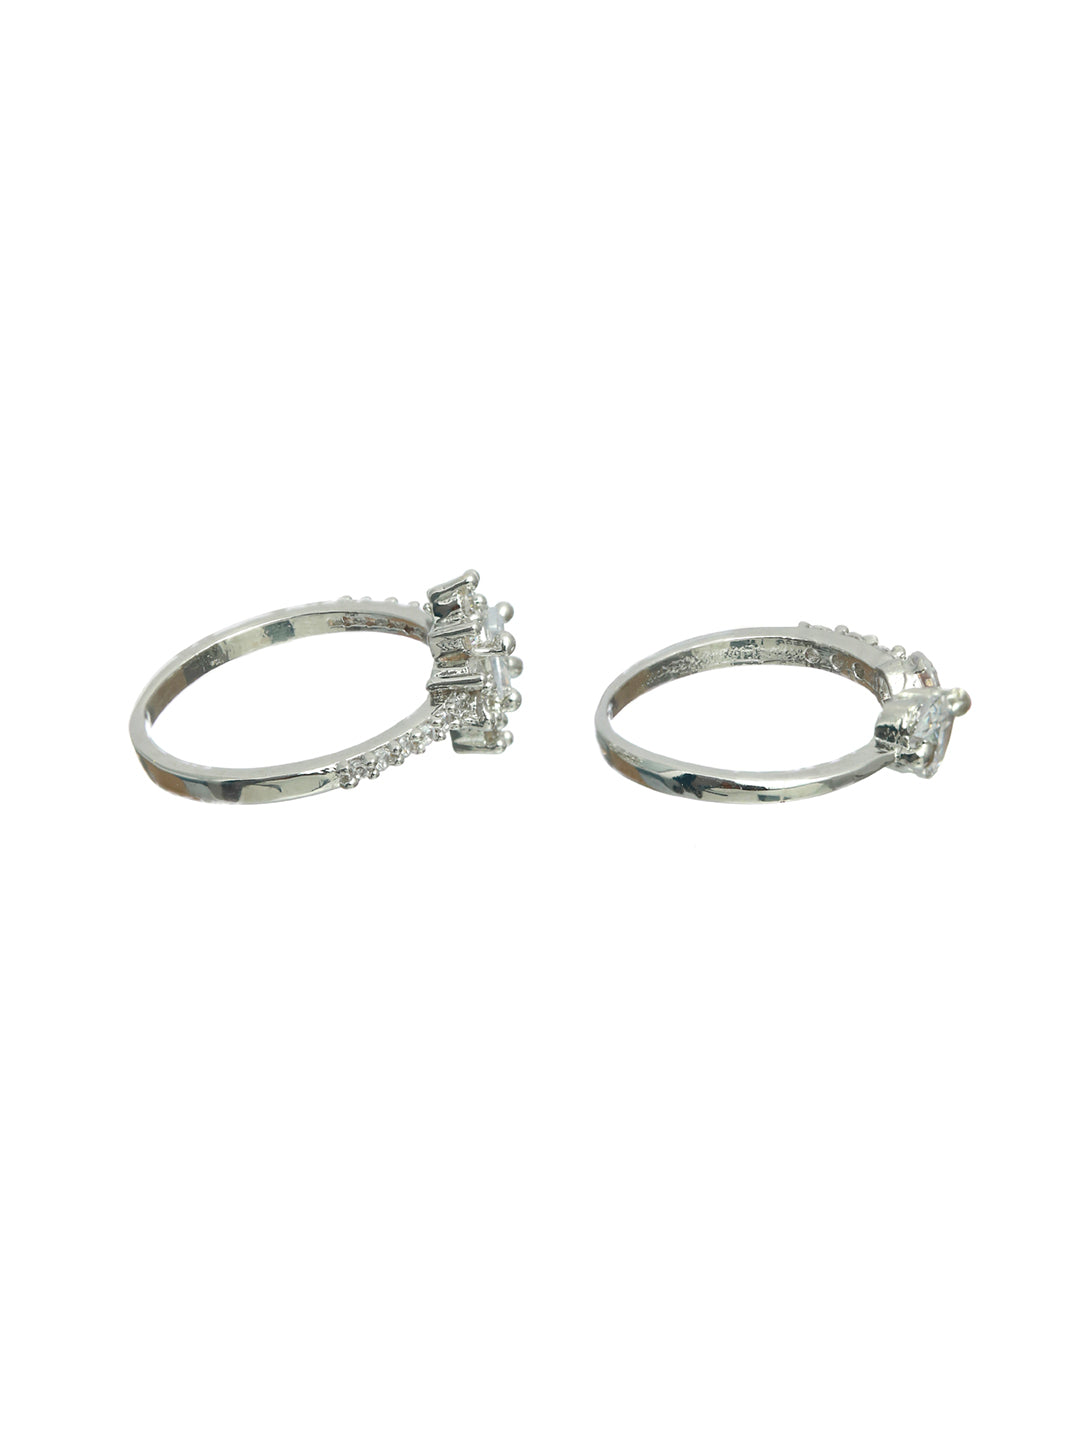 Priyaasi Floral American Diamond Silver Plated Ring Set of 2